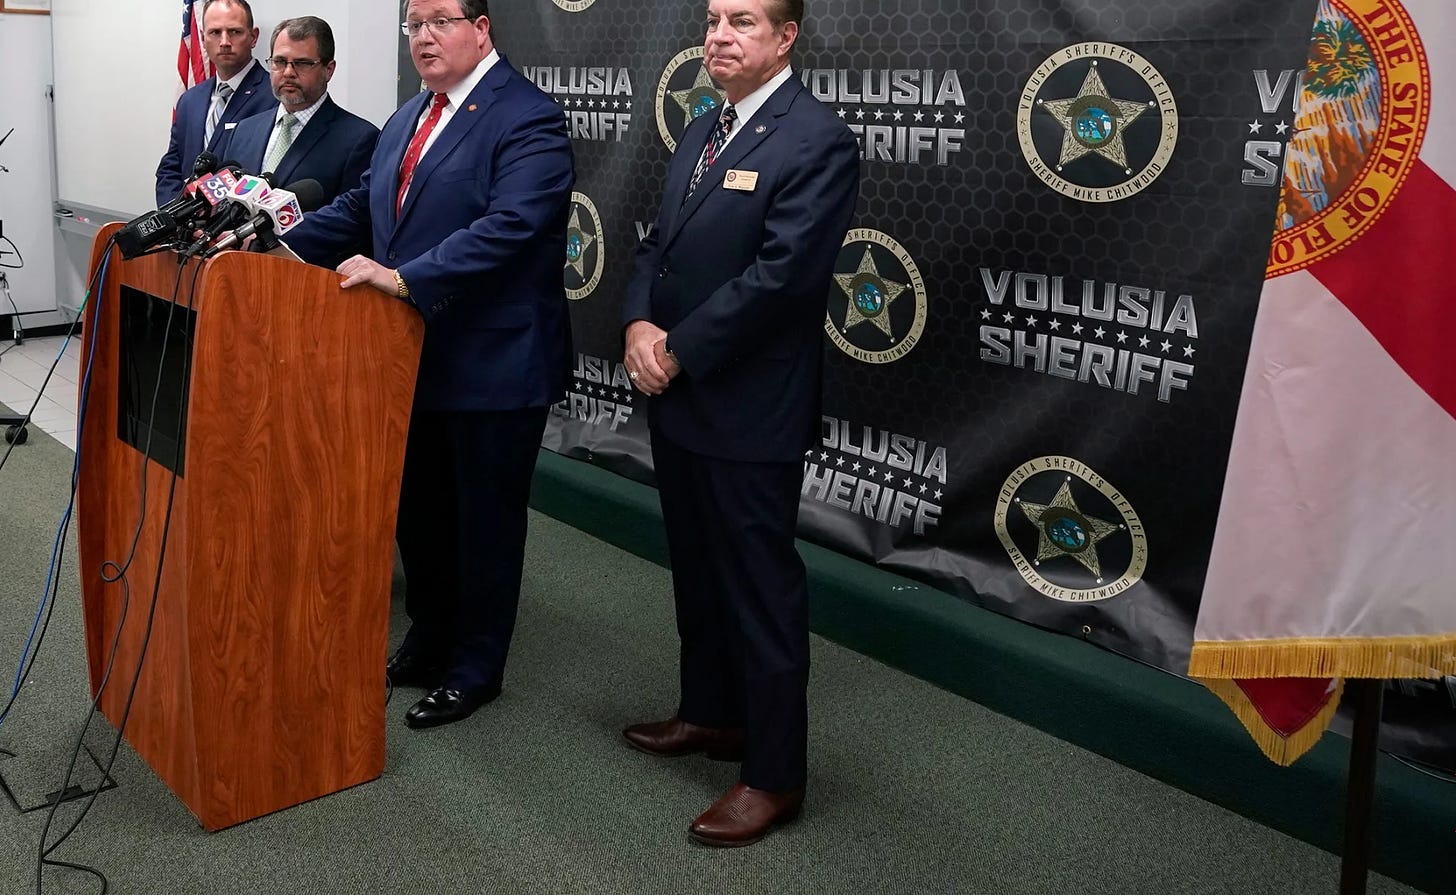 Florida state senator, Randy Fine, denouncing Nazi thugs at a press conference